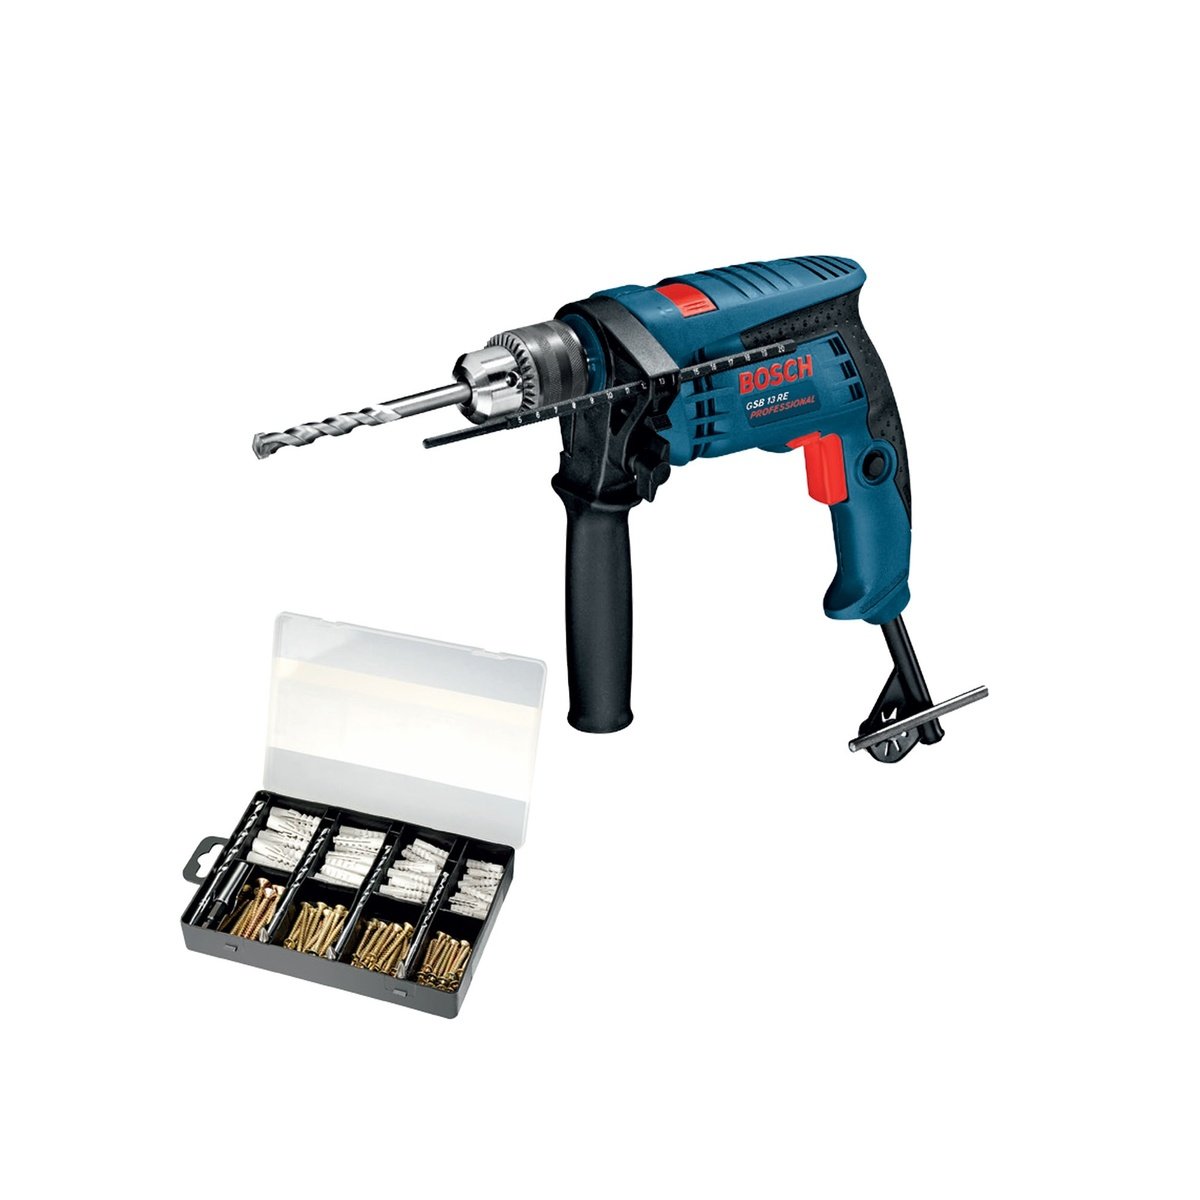 Bosch Professional Hammer Drill GSB13RE 600W + Accessories 173pcs